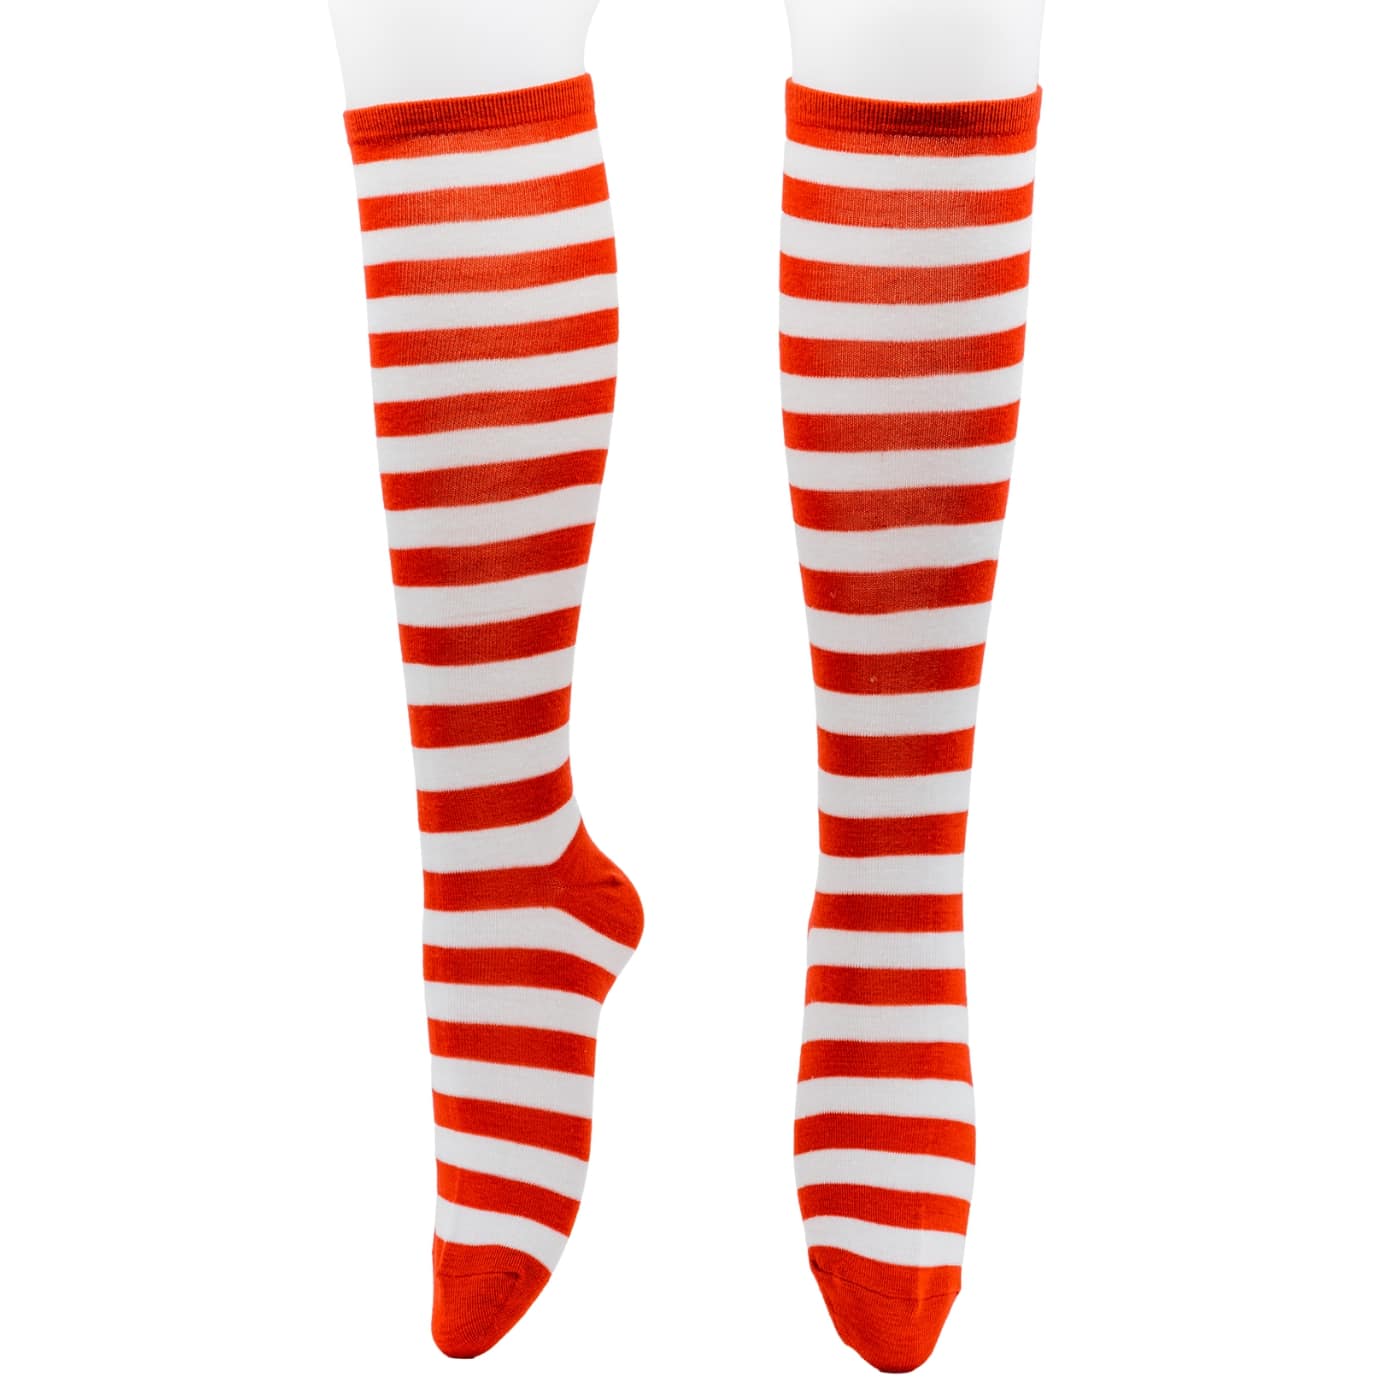 Red & White Stripe Knee High Socks by RainbowsAndFairies.com.au (Stripe Long Socks - Rainbow - Stockings - Colourful Socks - Vintage Inspired) - SKU: FW_SOCKS_STRIPE_R&W - Pic-01